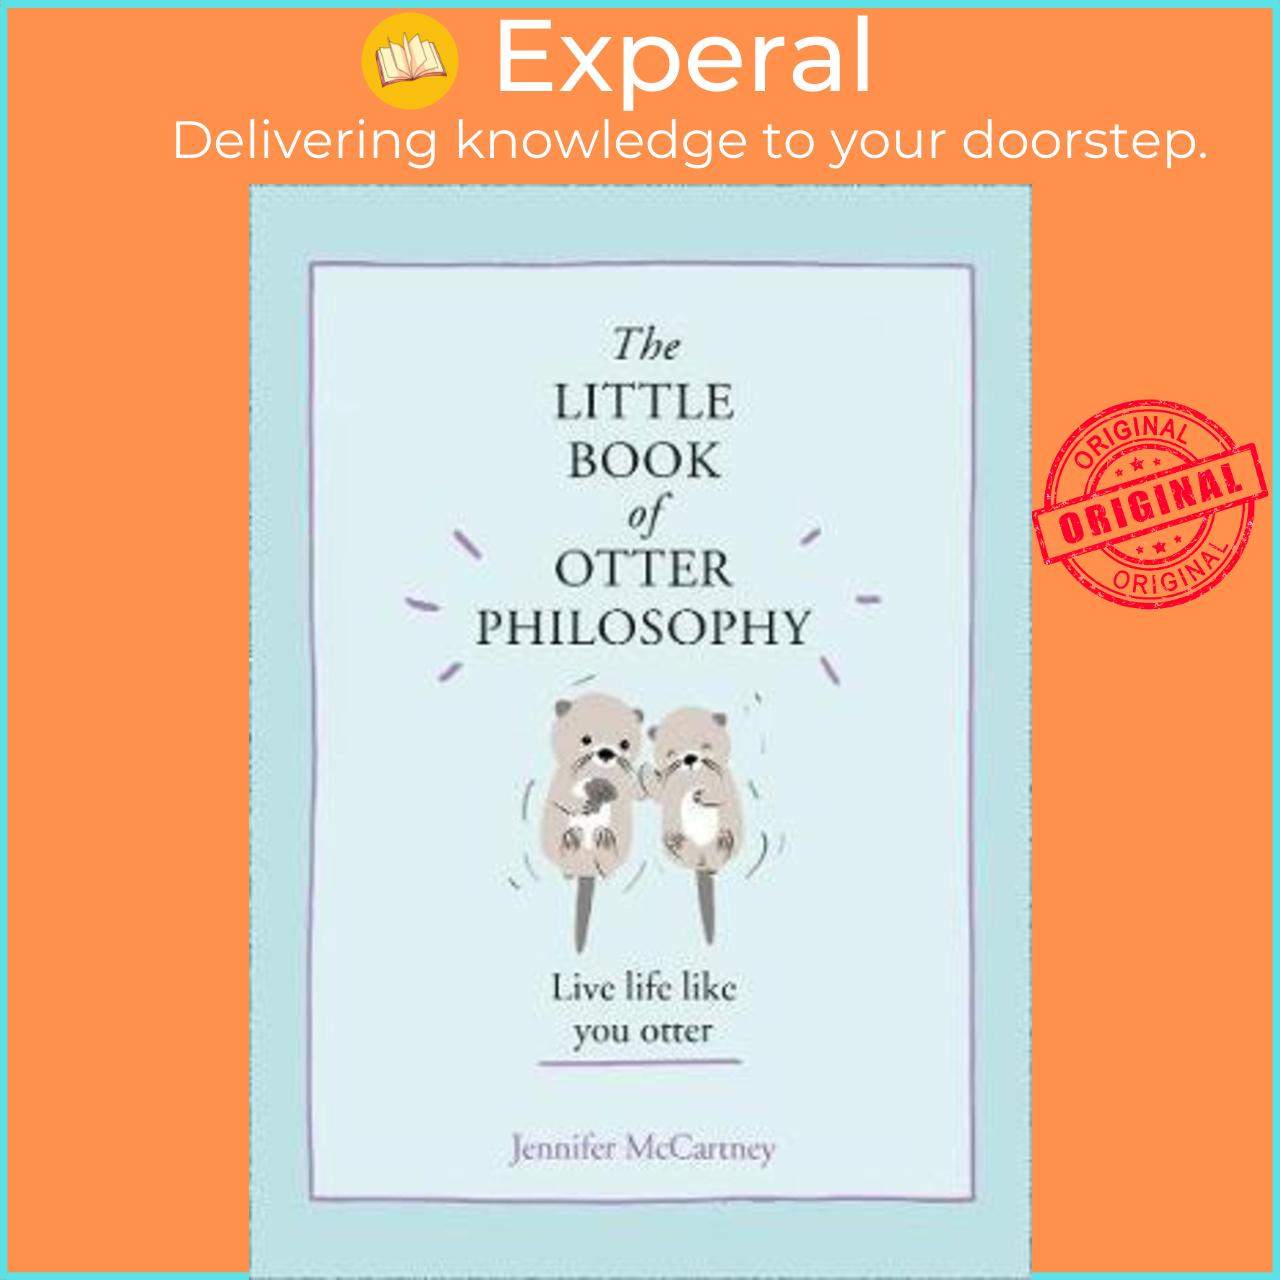 Sách - The Little Book of Otter Philosophy by Jennifer McCartney (UK edition, hardcover)